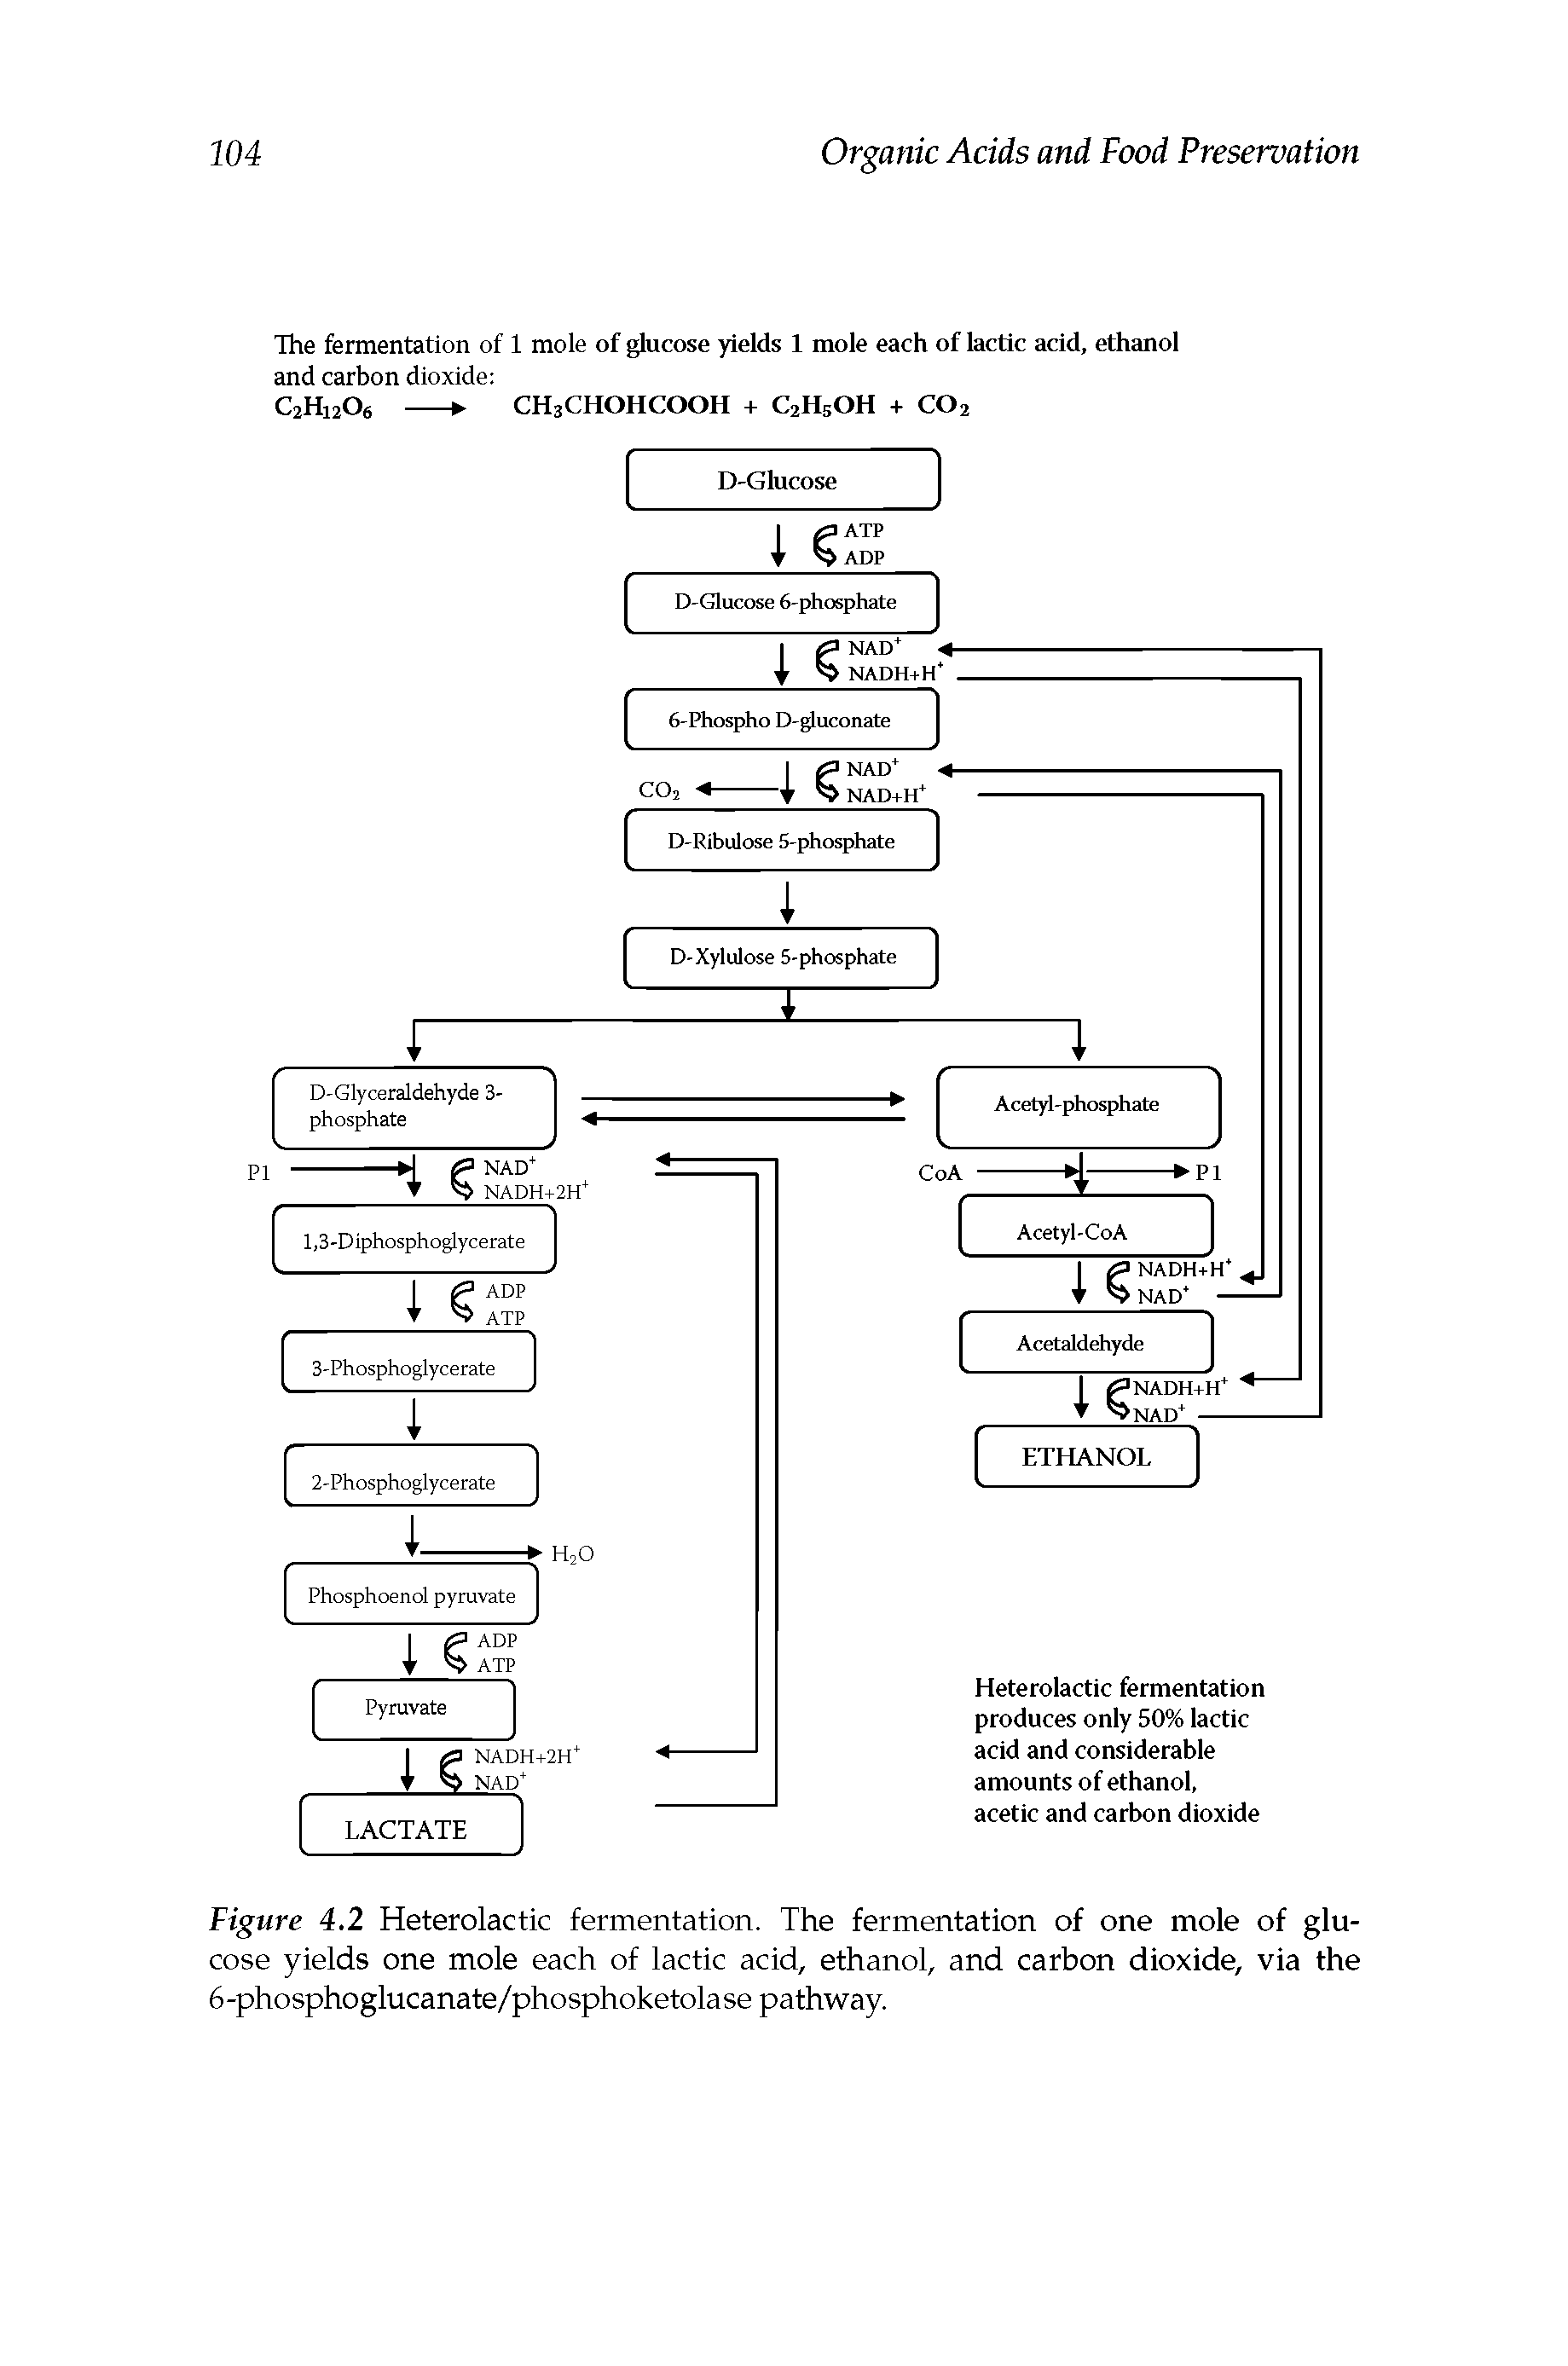 Figure 4.2 Heterolactic fermentation. The fermentation of one mole of glucose yields one mole each of lactic acid, ethanol, and carbon dioxide, via the 6-phosphoglucanate/phosphoketolase pathway.